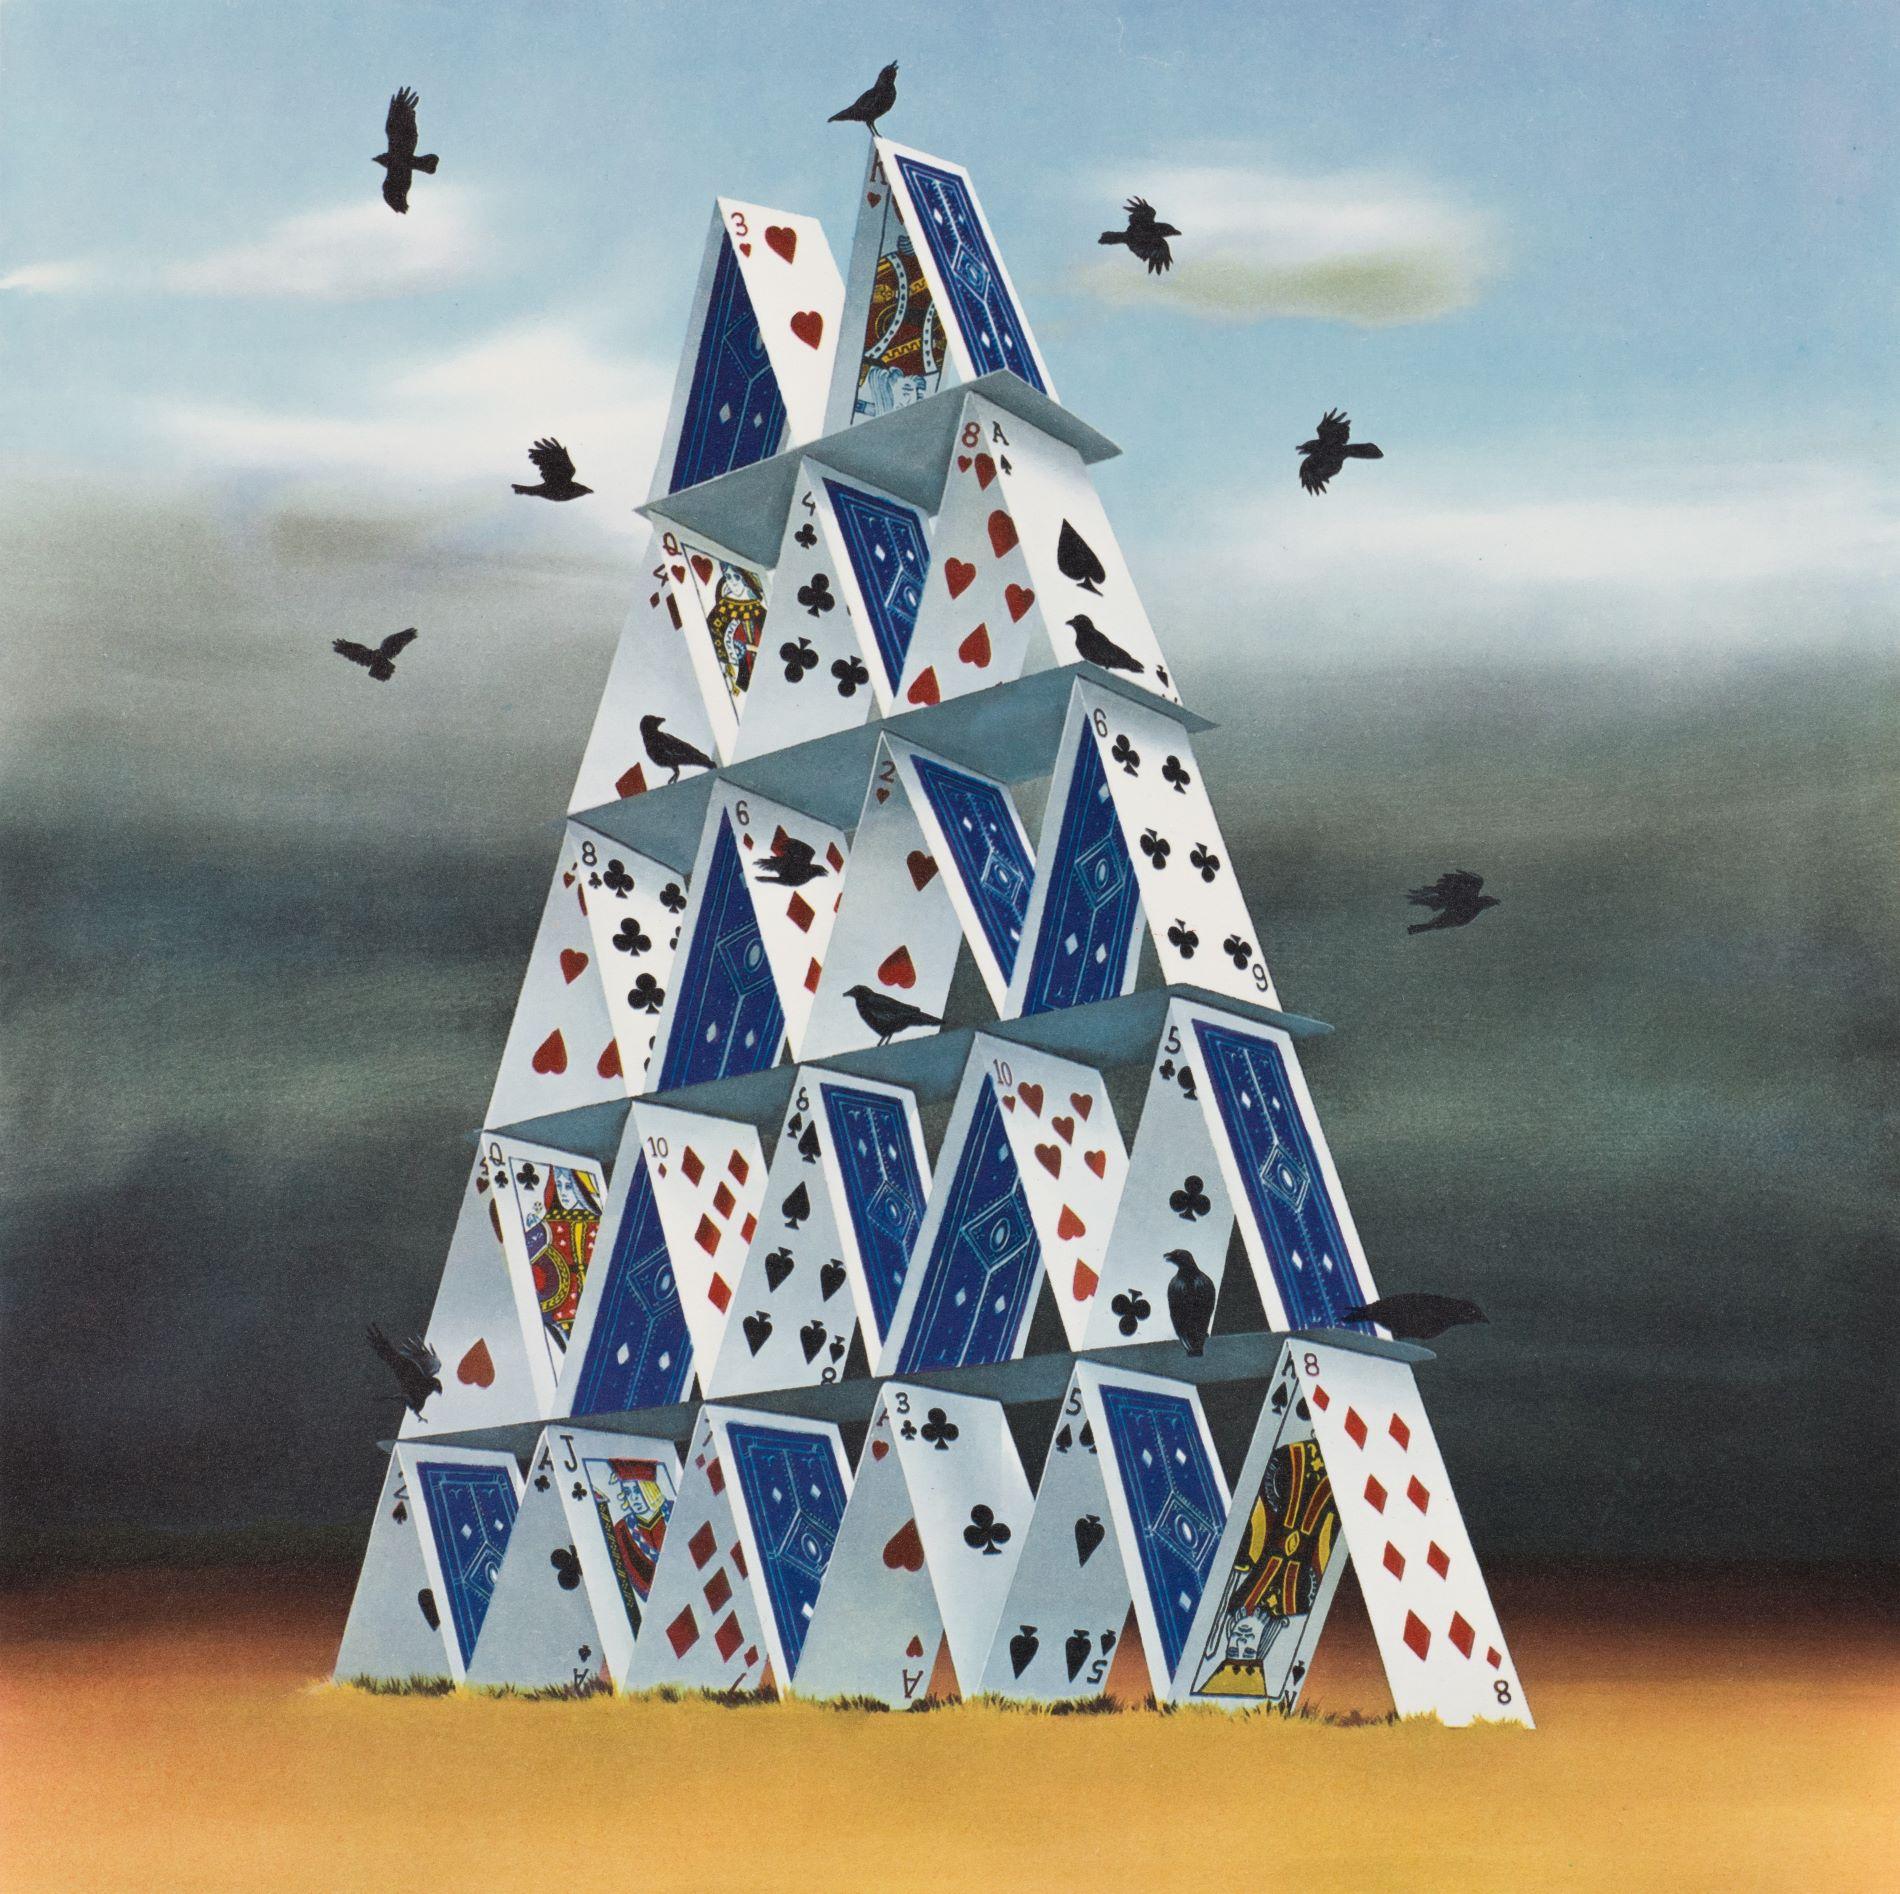 House of Cards - Print by Robert Deyber 